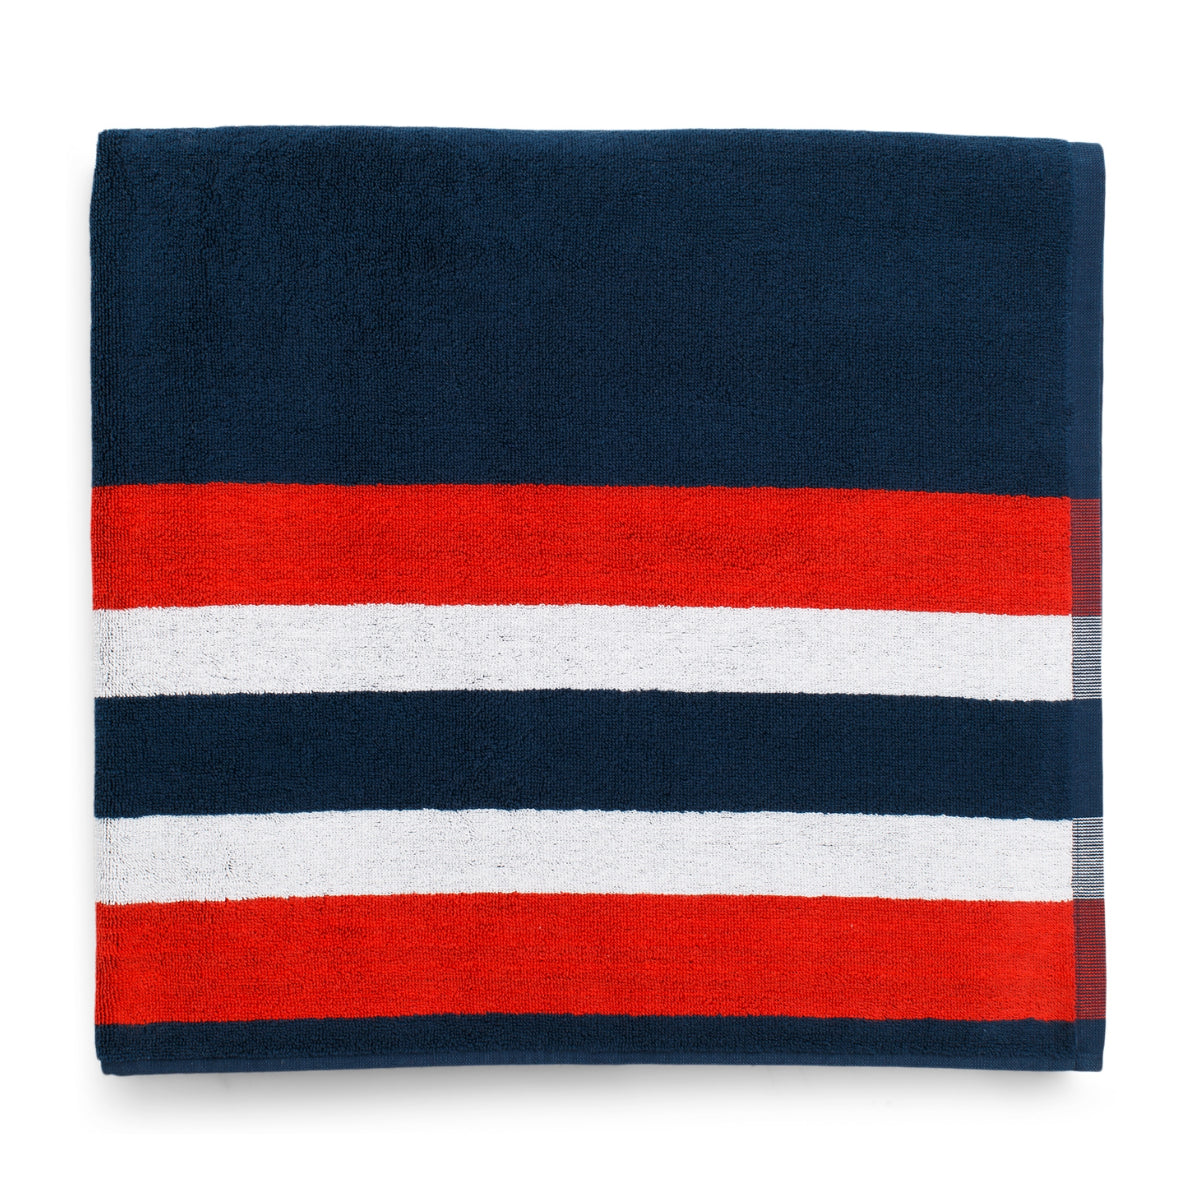 Amundsen Sports - Aqua Beach Towel - Faded Navy